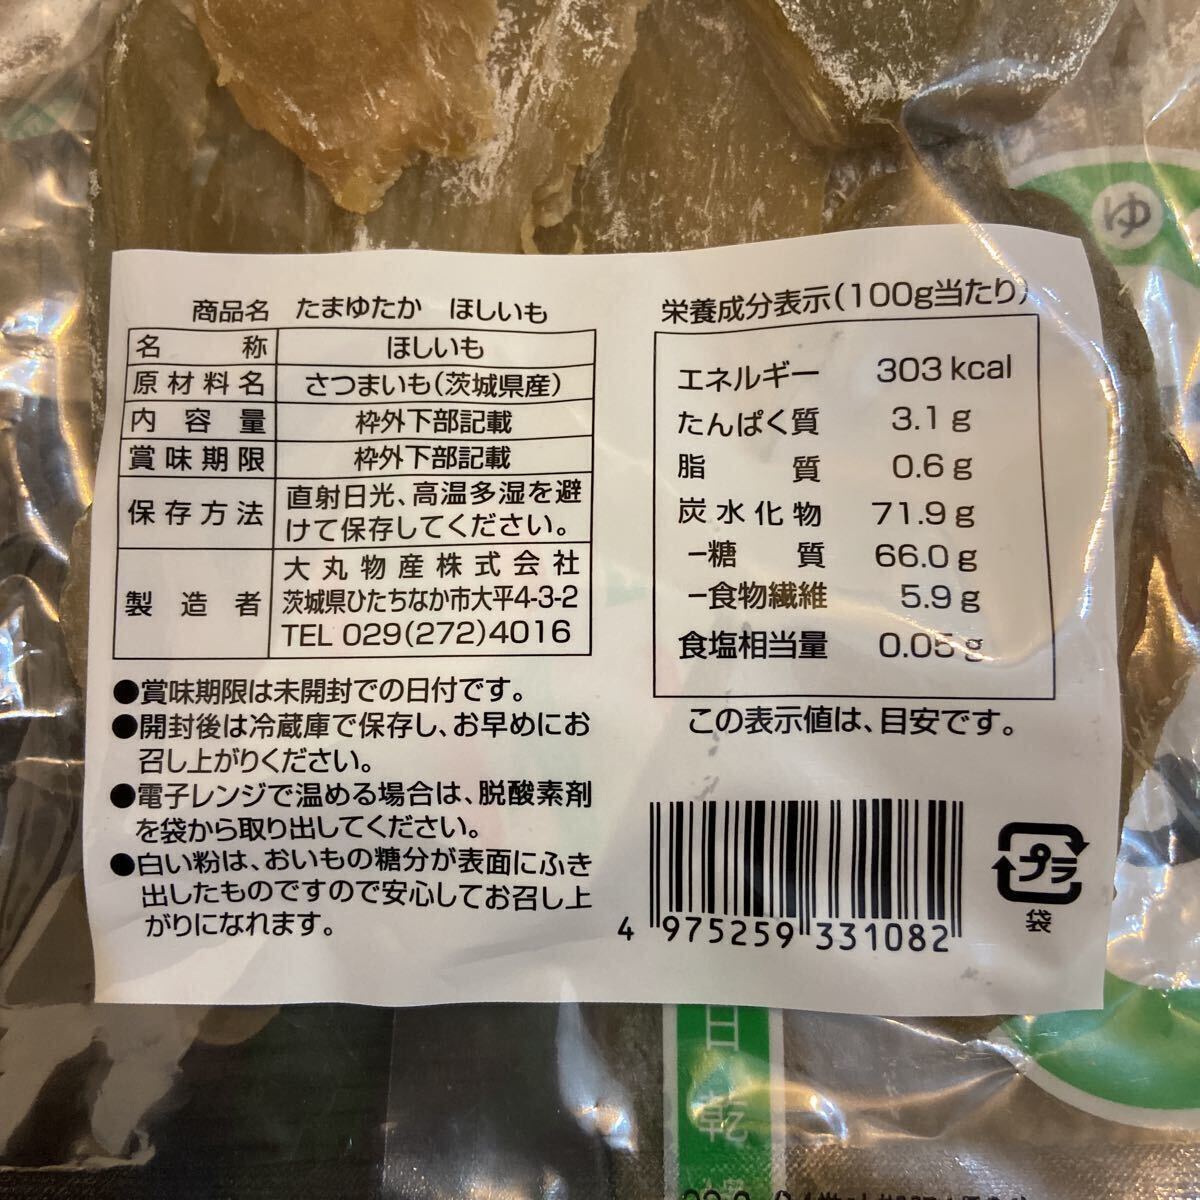  Tama ... сушеный картофел Ibaraki Special производство 170g 4 шт. комплект 615